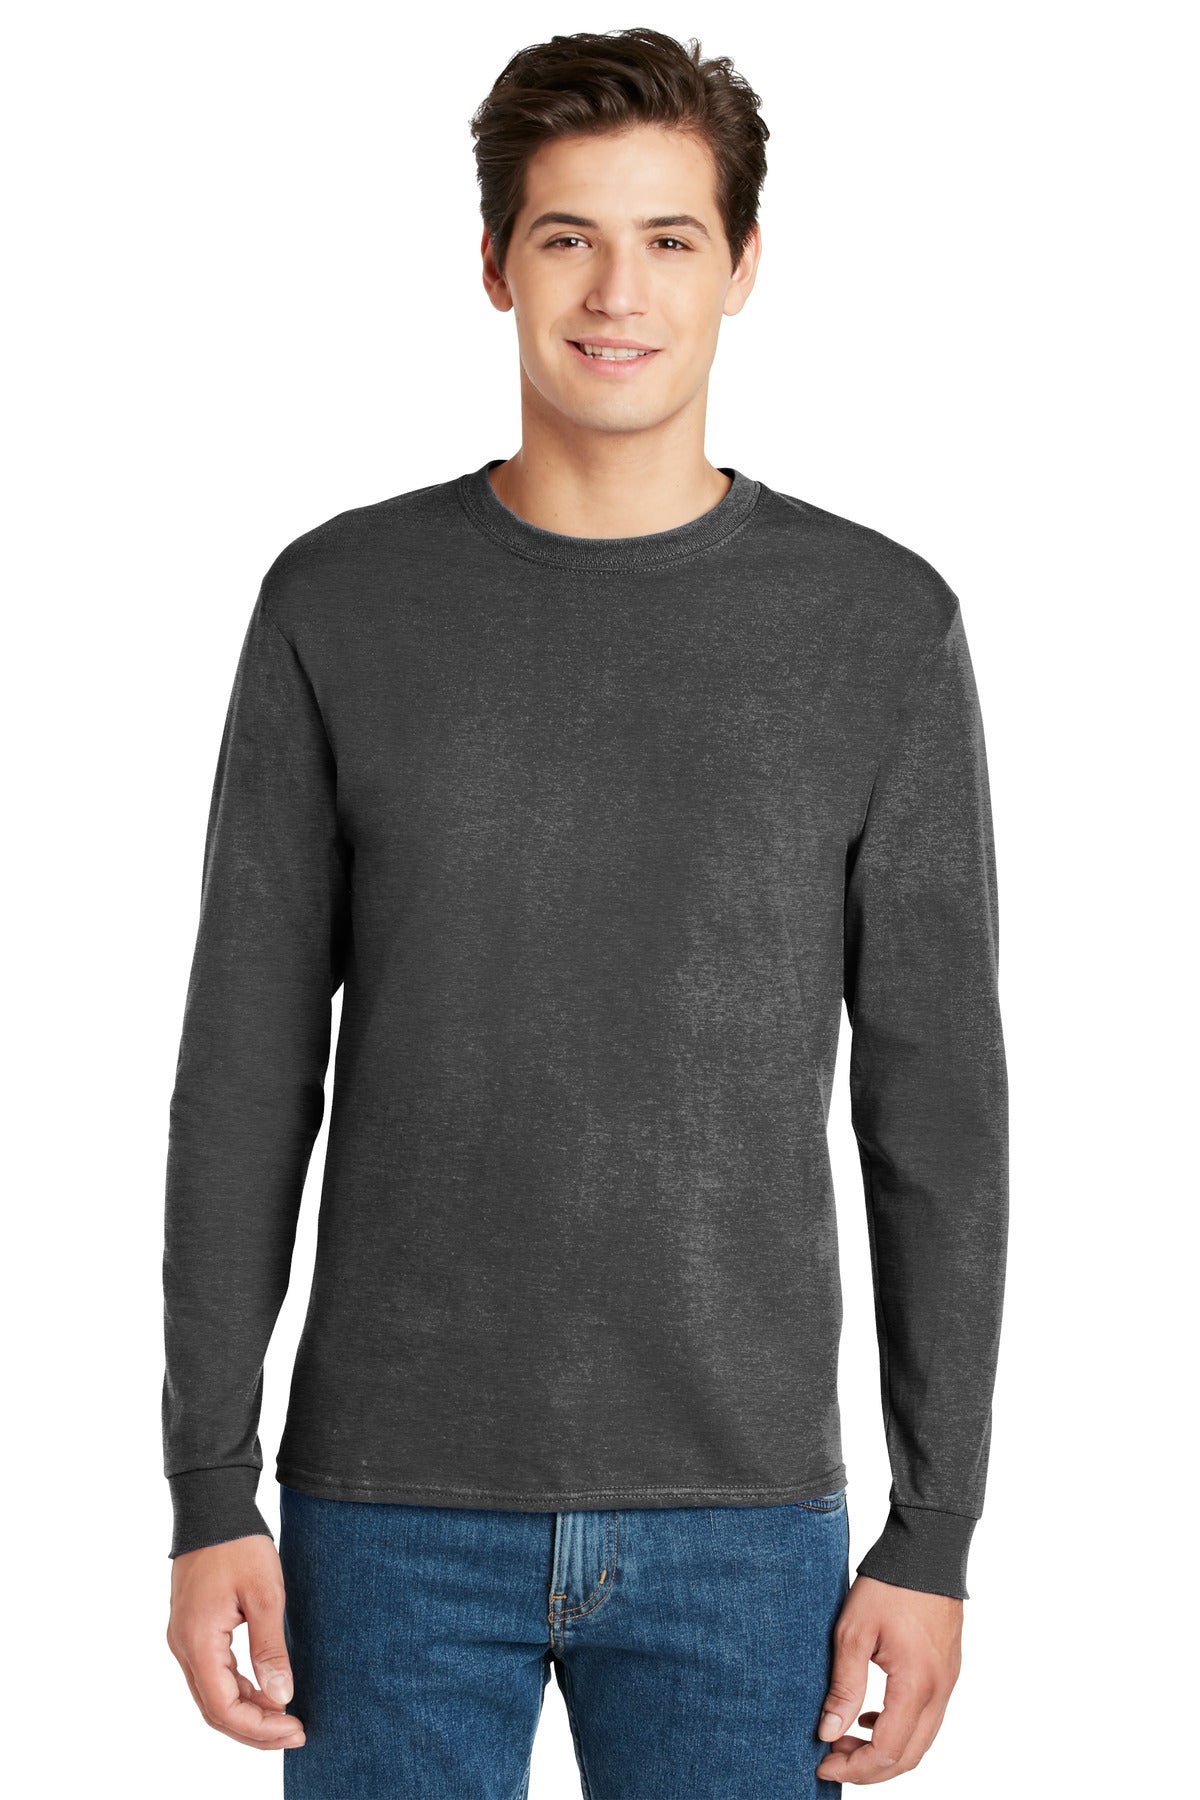 Hanes® - Authentic 100% Cotton Long Sleeve T-Shirt.  5586